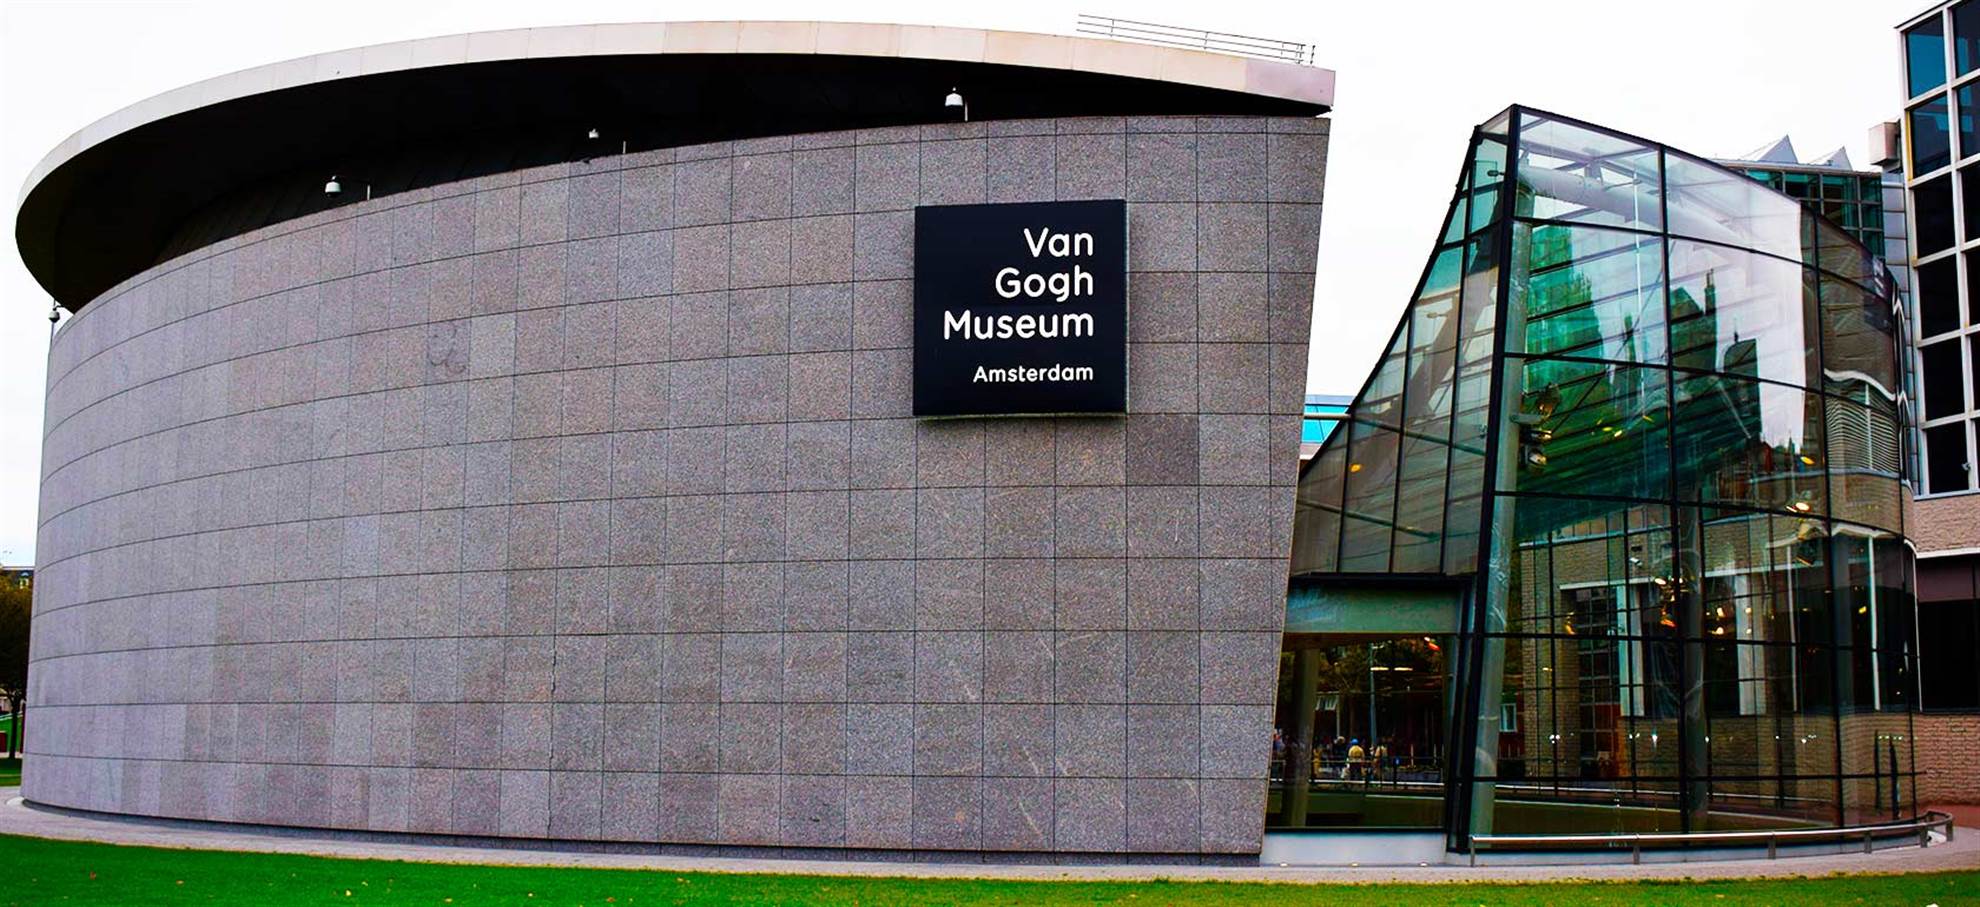 Van Gogh Museum Skip the line tickets!